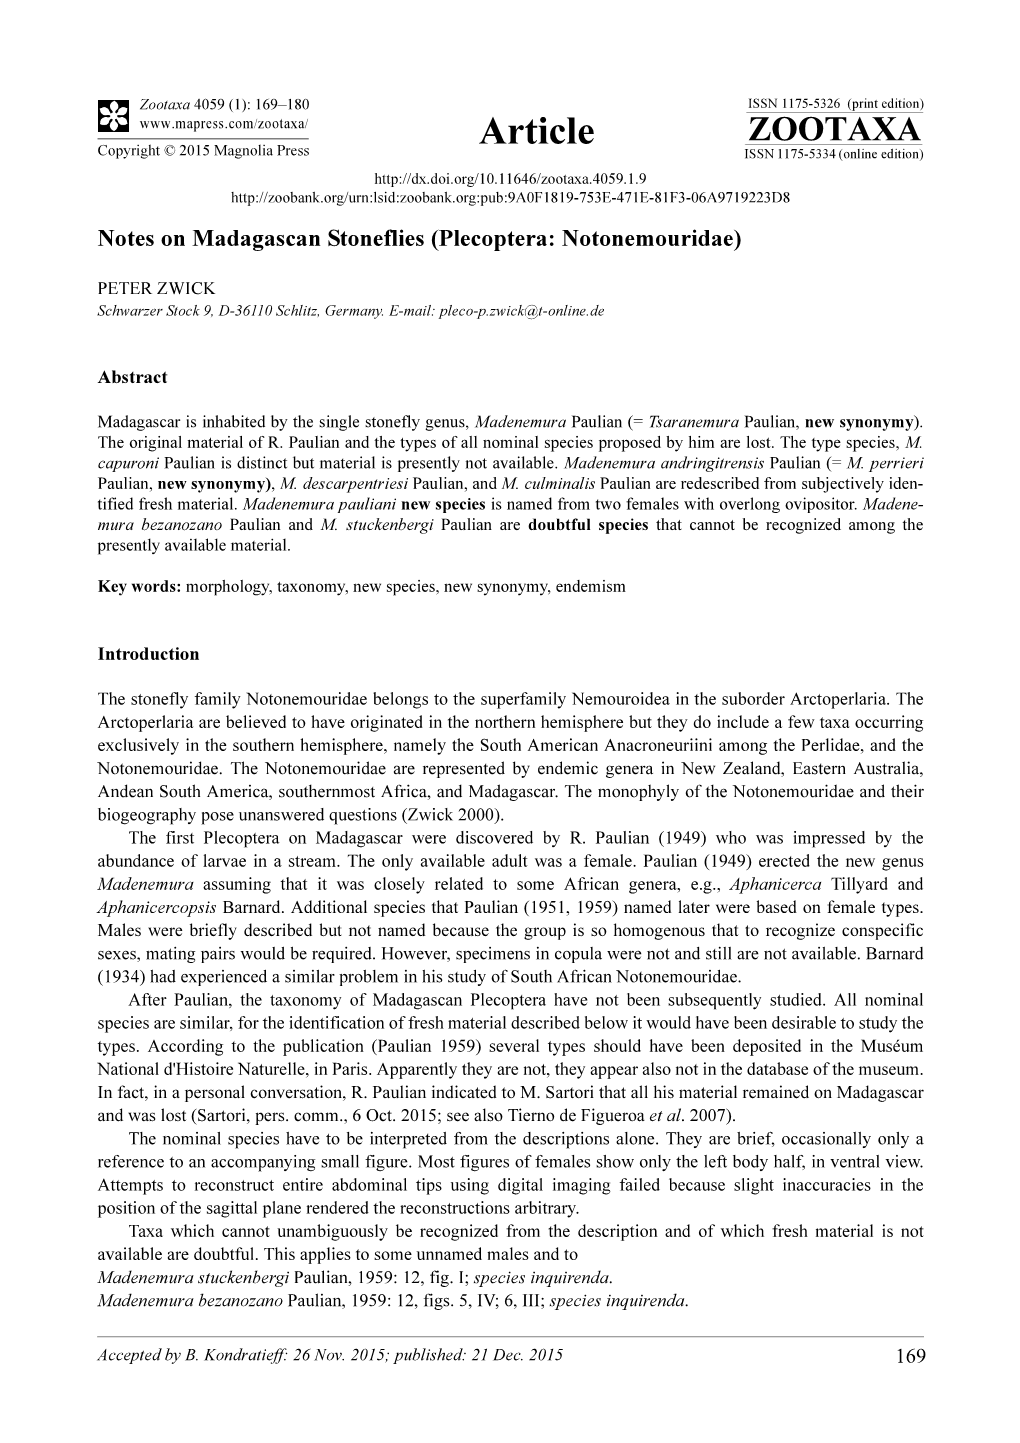 Notes on Madagascan Stoneflies (Plecoptera: Notonemouridae)